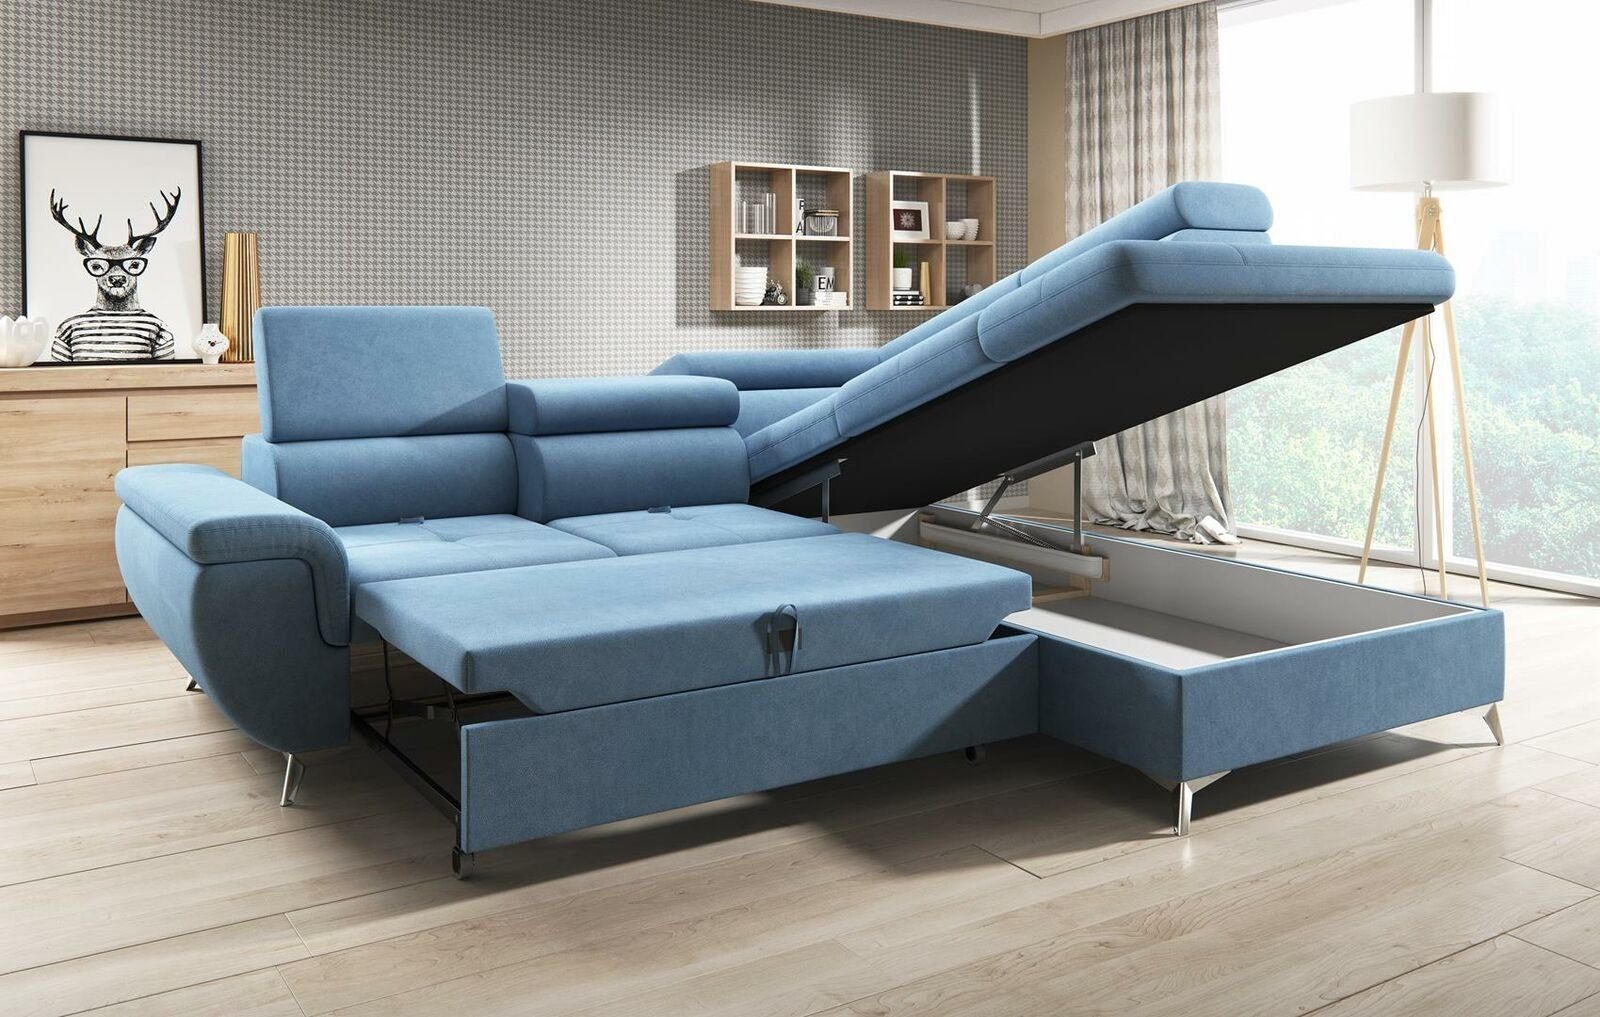 JVmoebel Ecksofa Ecksofa Blau L-Form Couch Mit Sofas, Sofa Polster Design Ecksofa Leder Bettfunktion